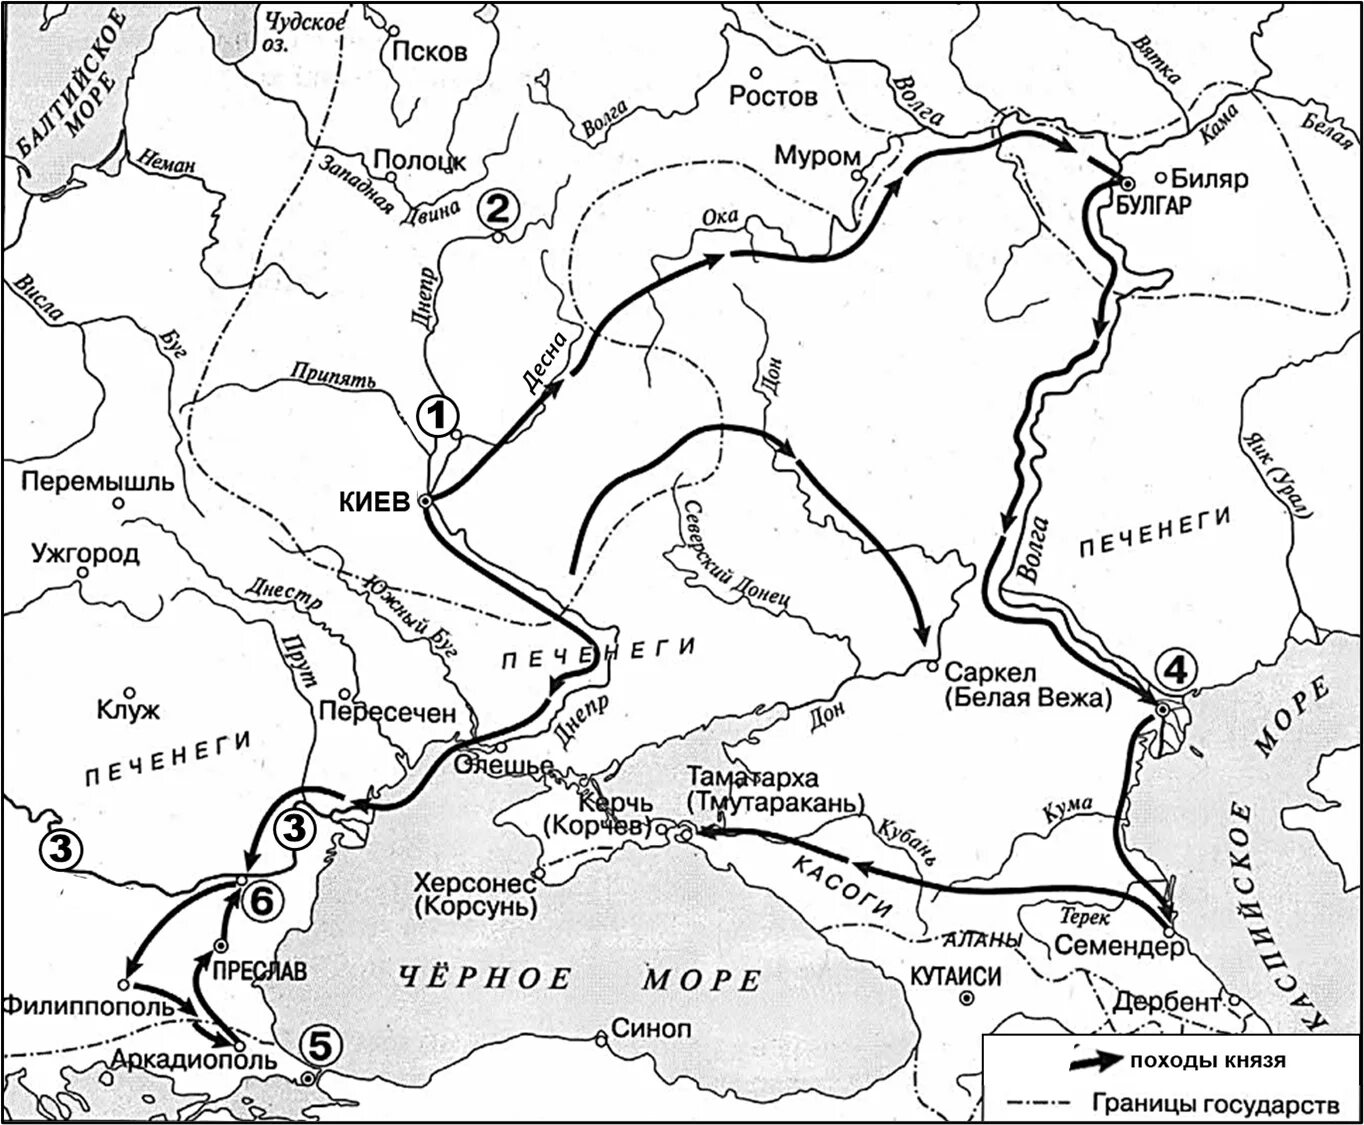 Крымское ханство на карте впр. Юпоходы кнчзя святомлава еа карте.